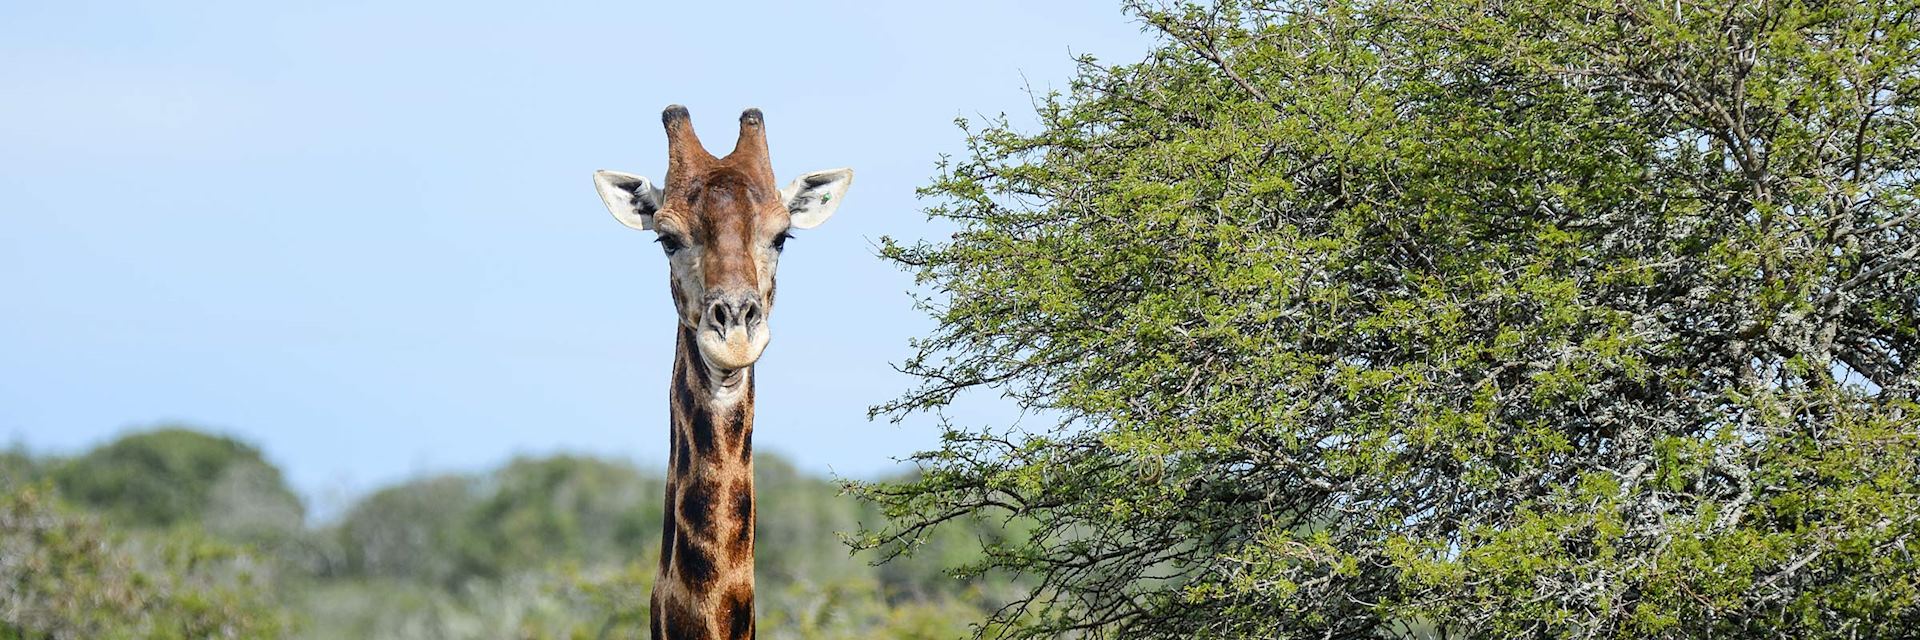 Giraffe in Amakhala Game Reserve